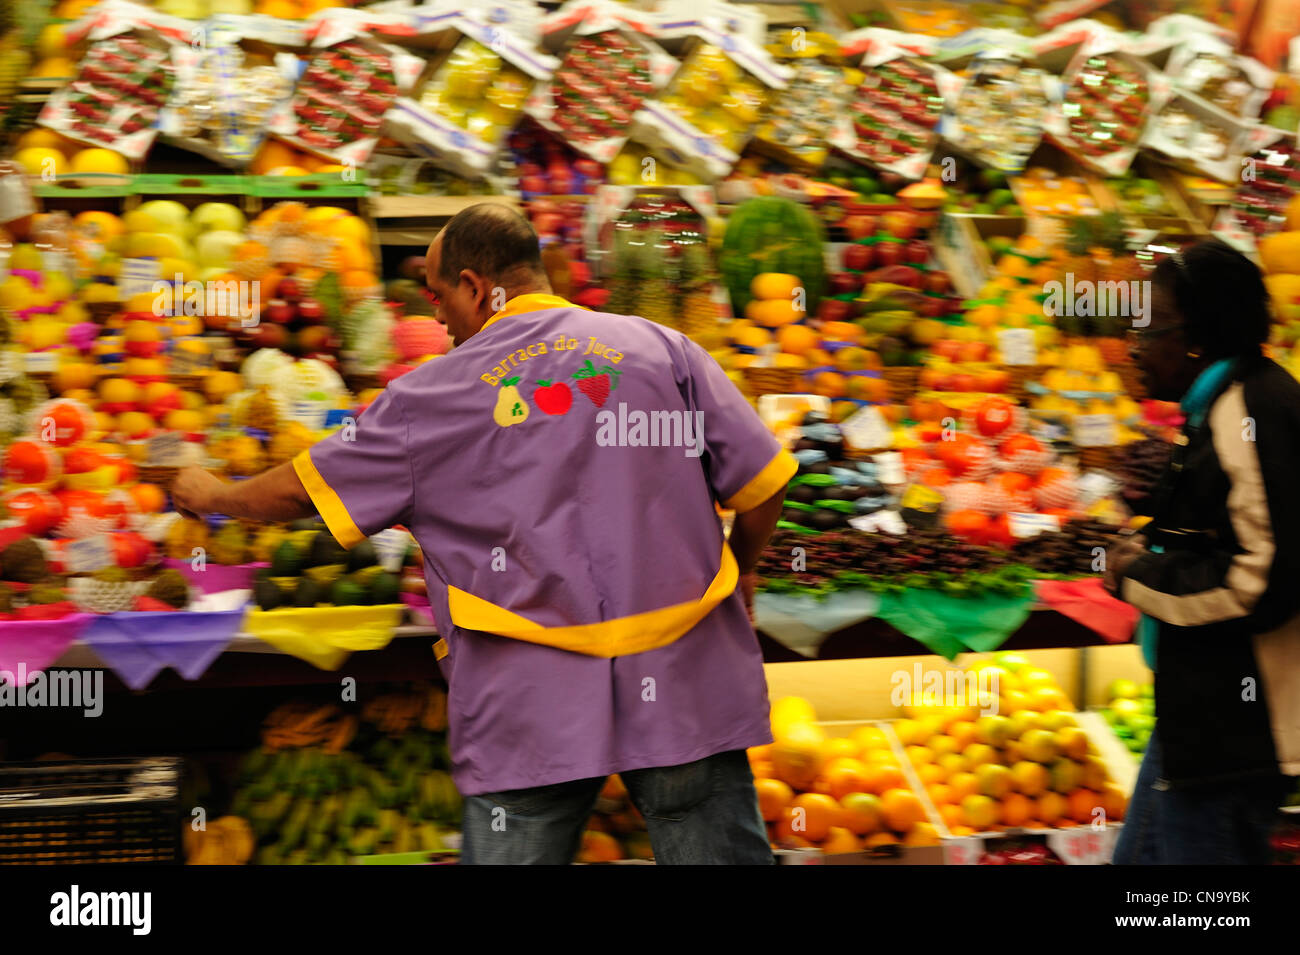 Brazil, Sao Paulo, Mercadao city market, fruit stalls Stock Photo